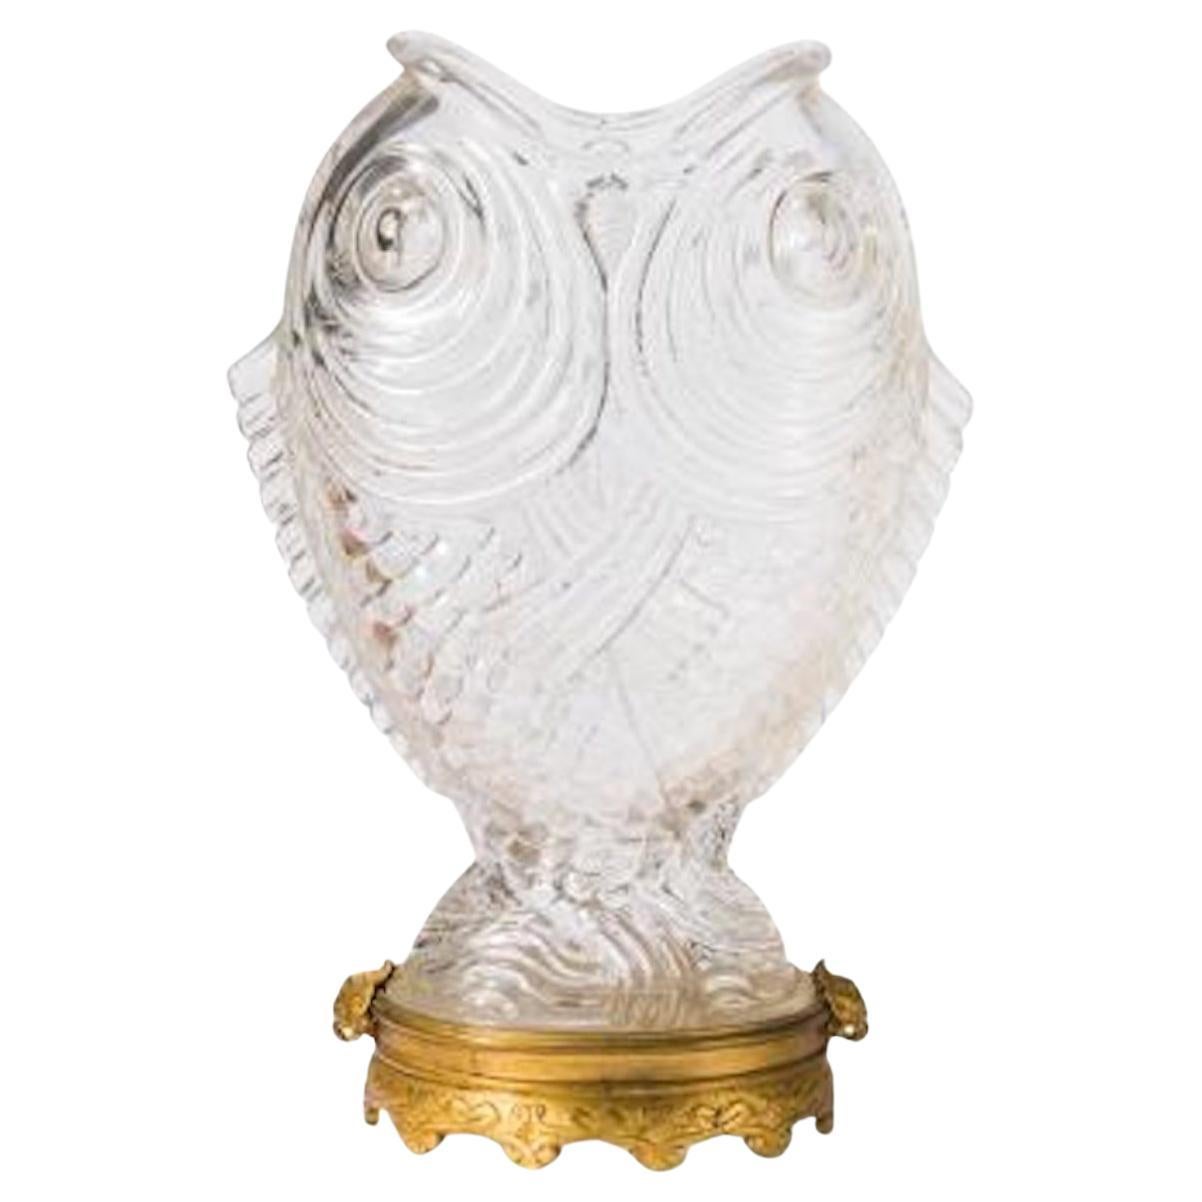 Baccarat Crystallery for L’Escalier de Cristal "Carpe" Glass Vase